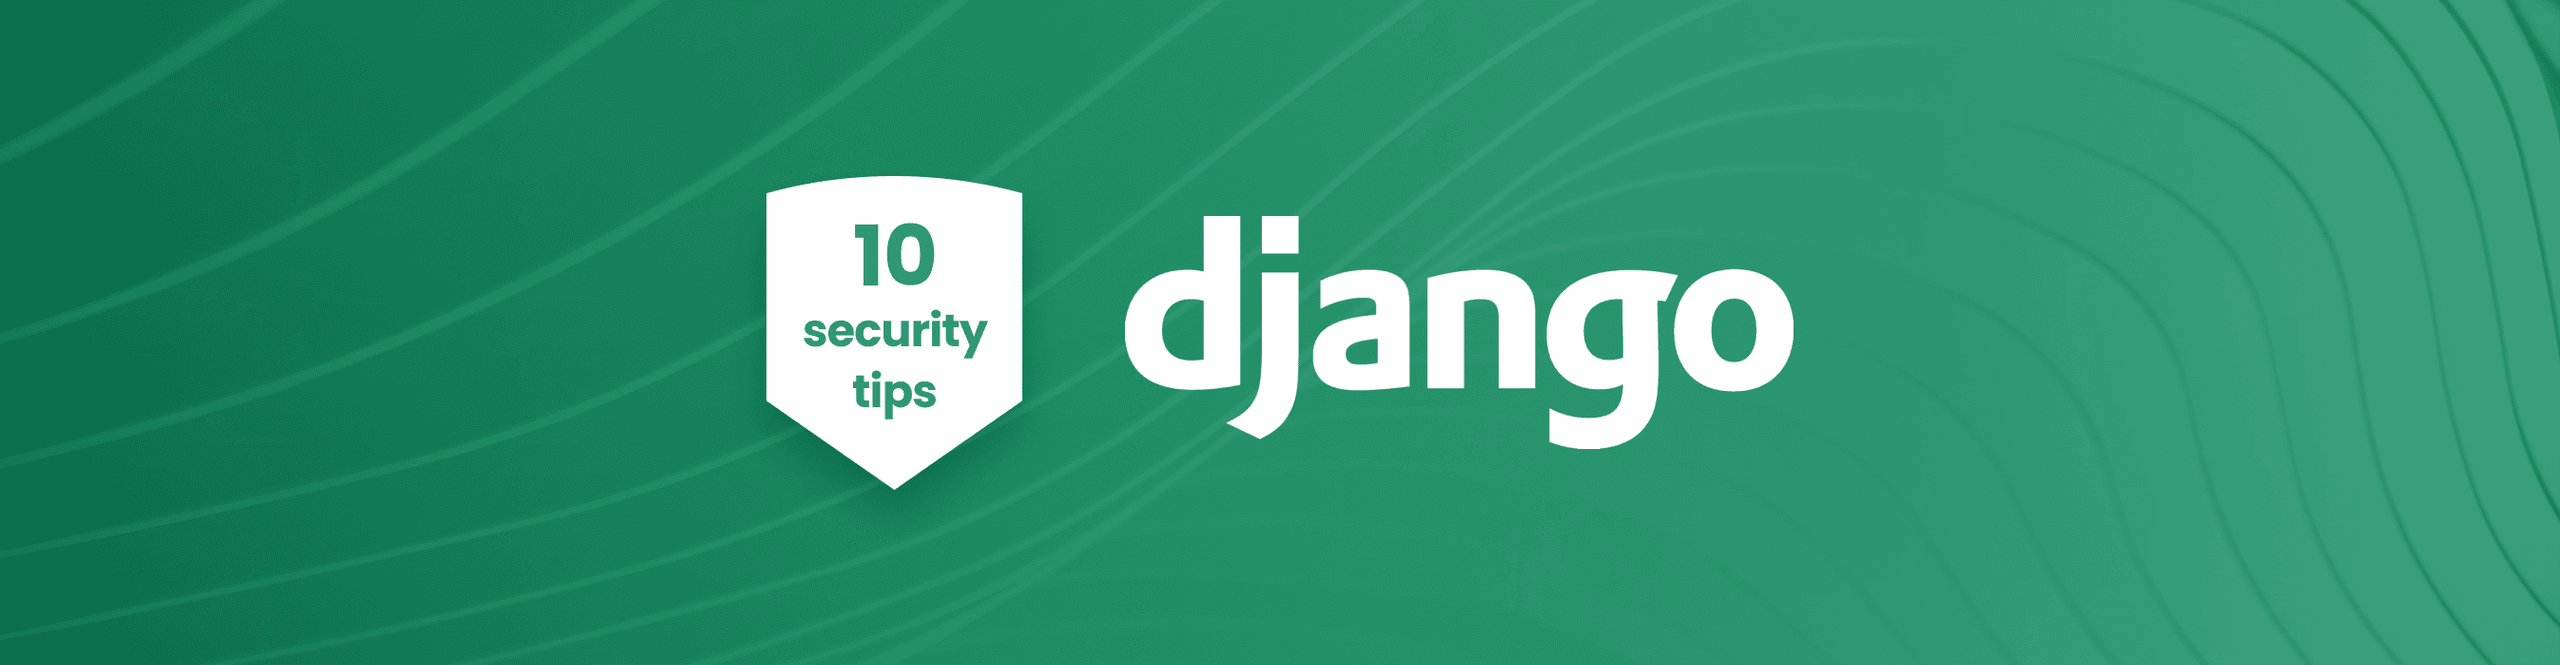 wordpress-sync/blog-10-security-tips-django